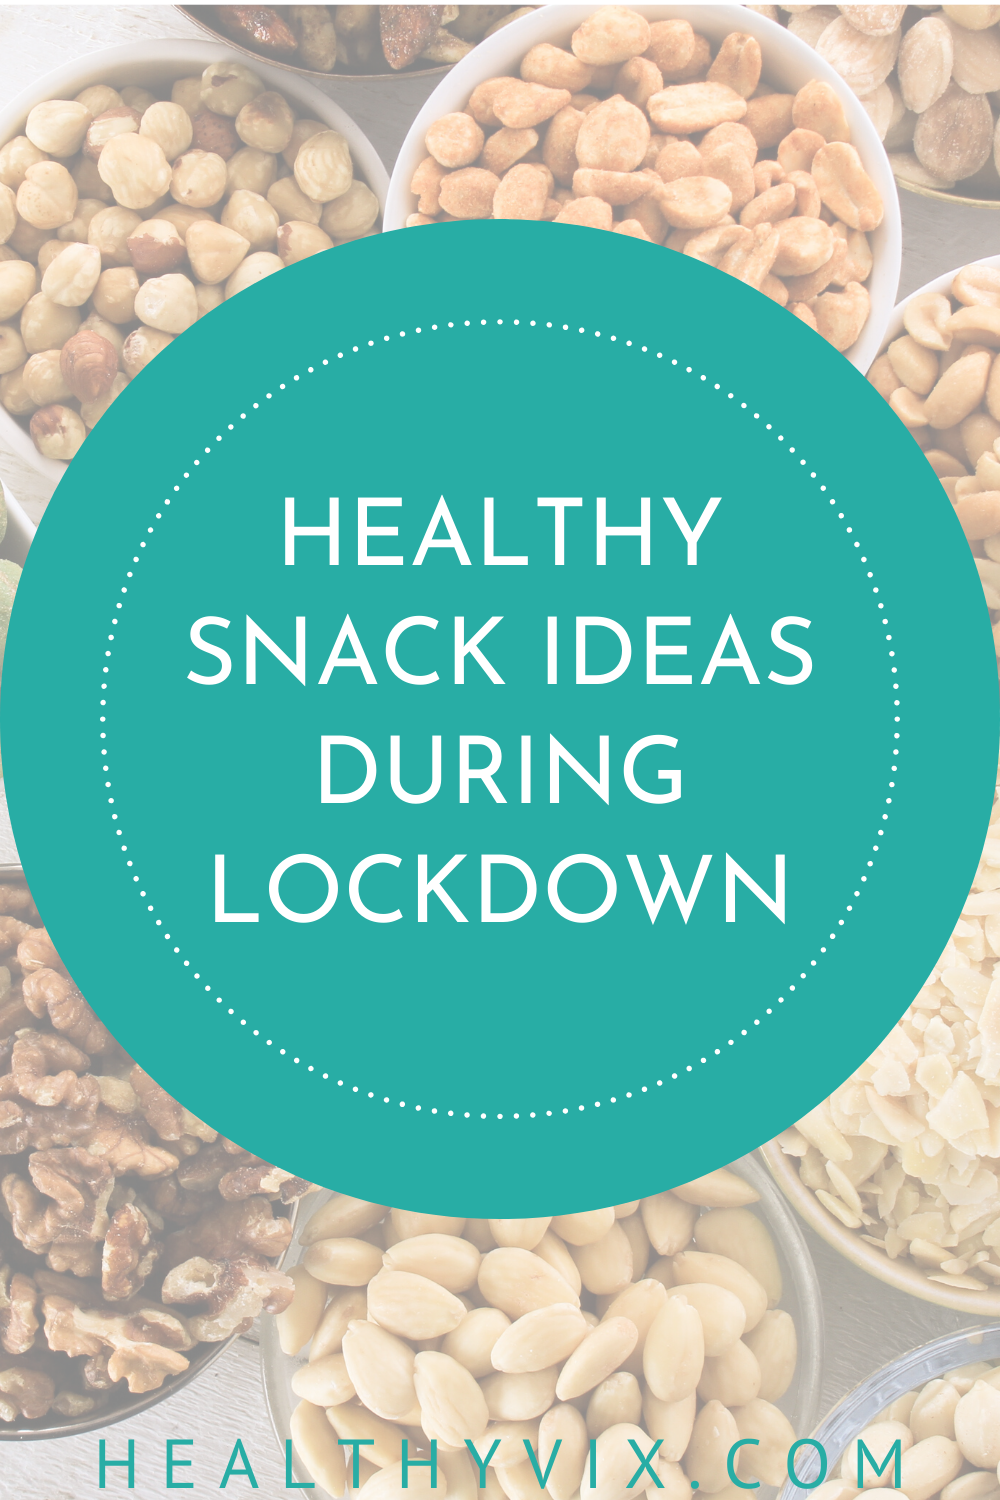 Healthy snack ideas during lockdown